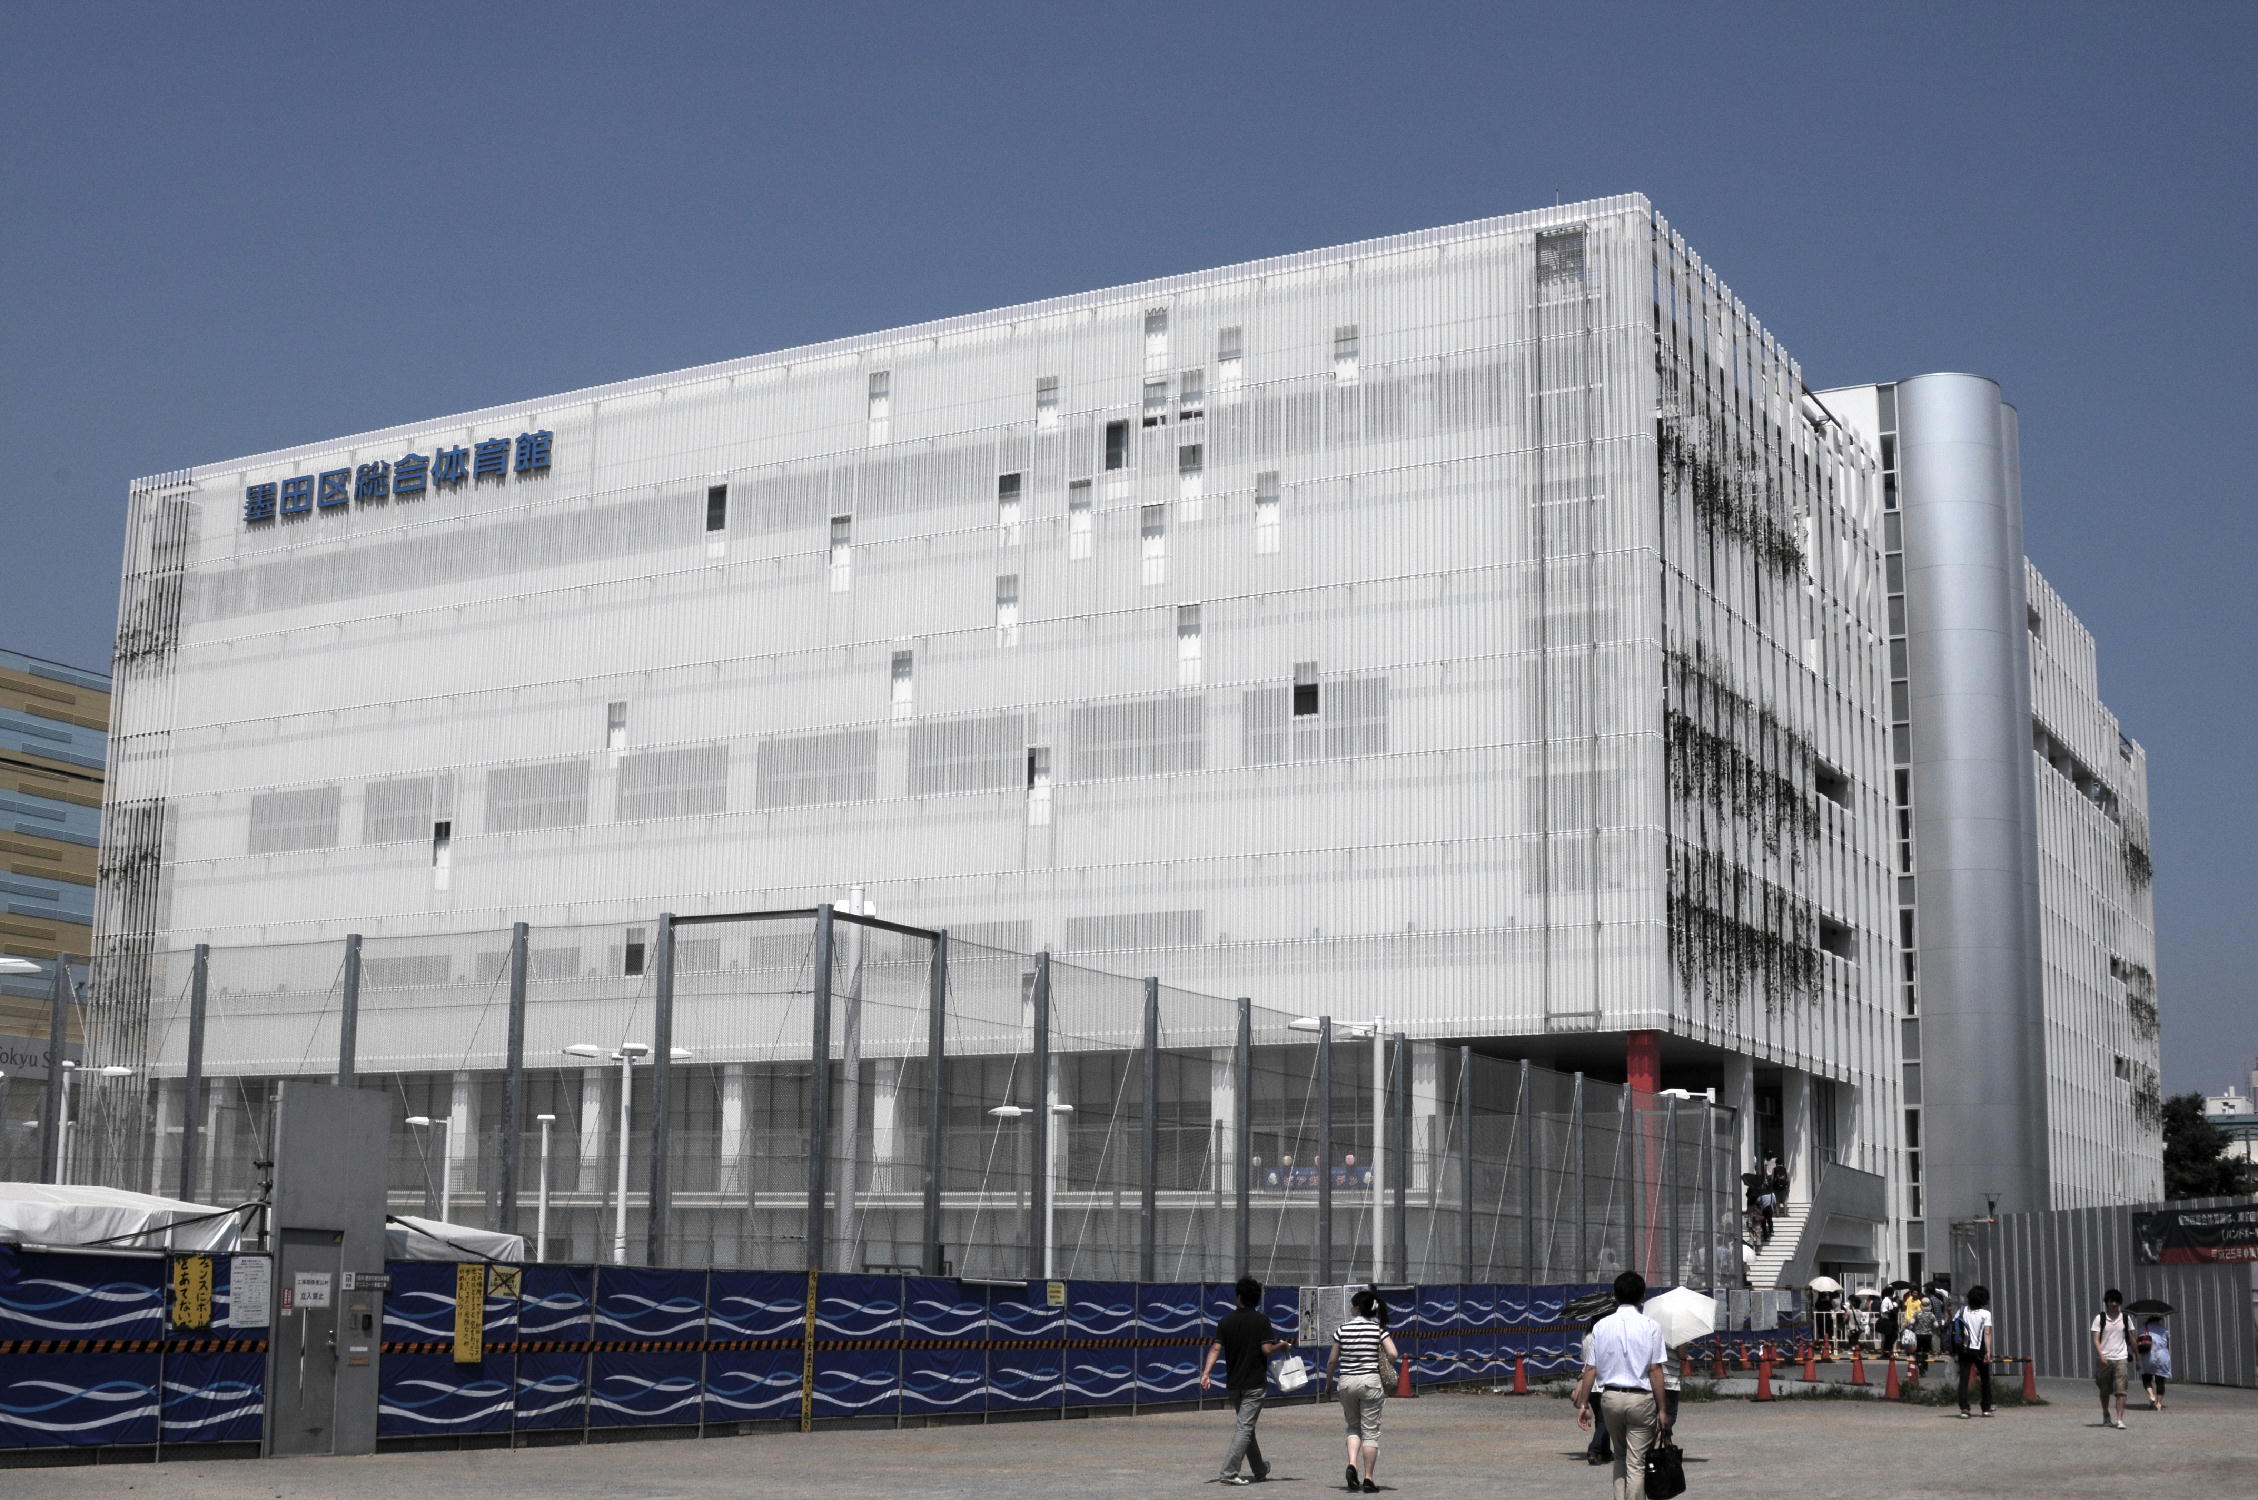 Sumida City Gymnasium - Wikipedia